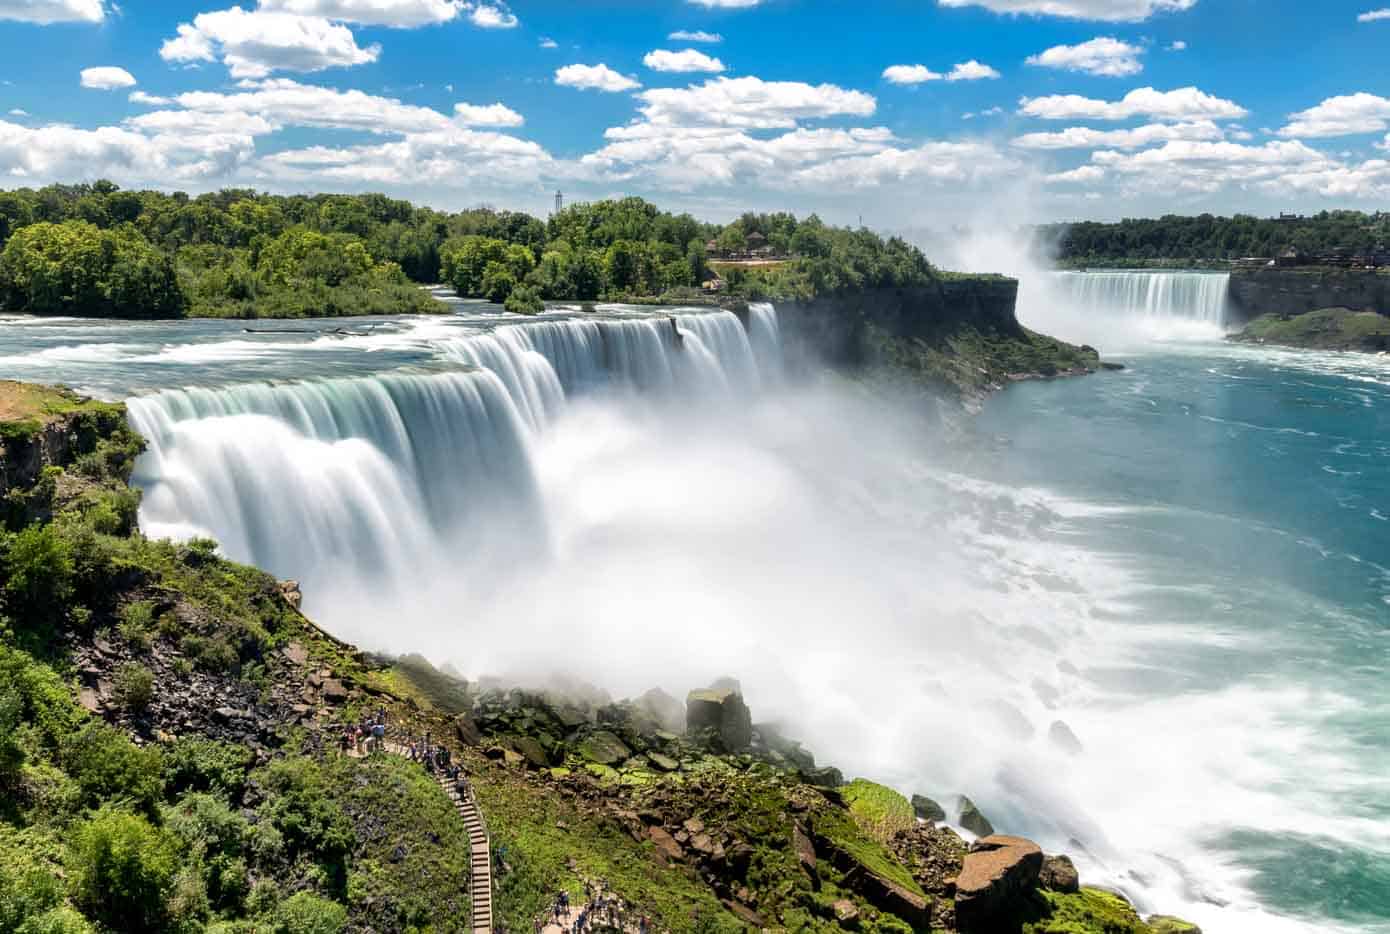 Niagara falls waterfalls with huge water mist cloud at the bottom.